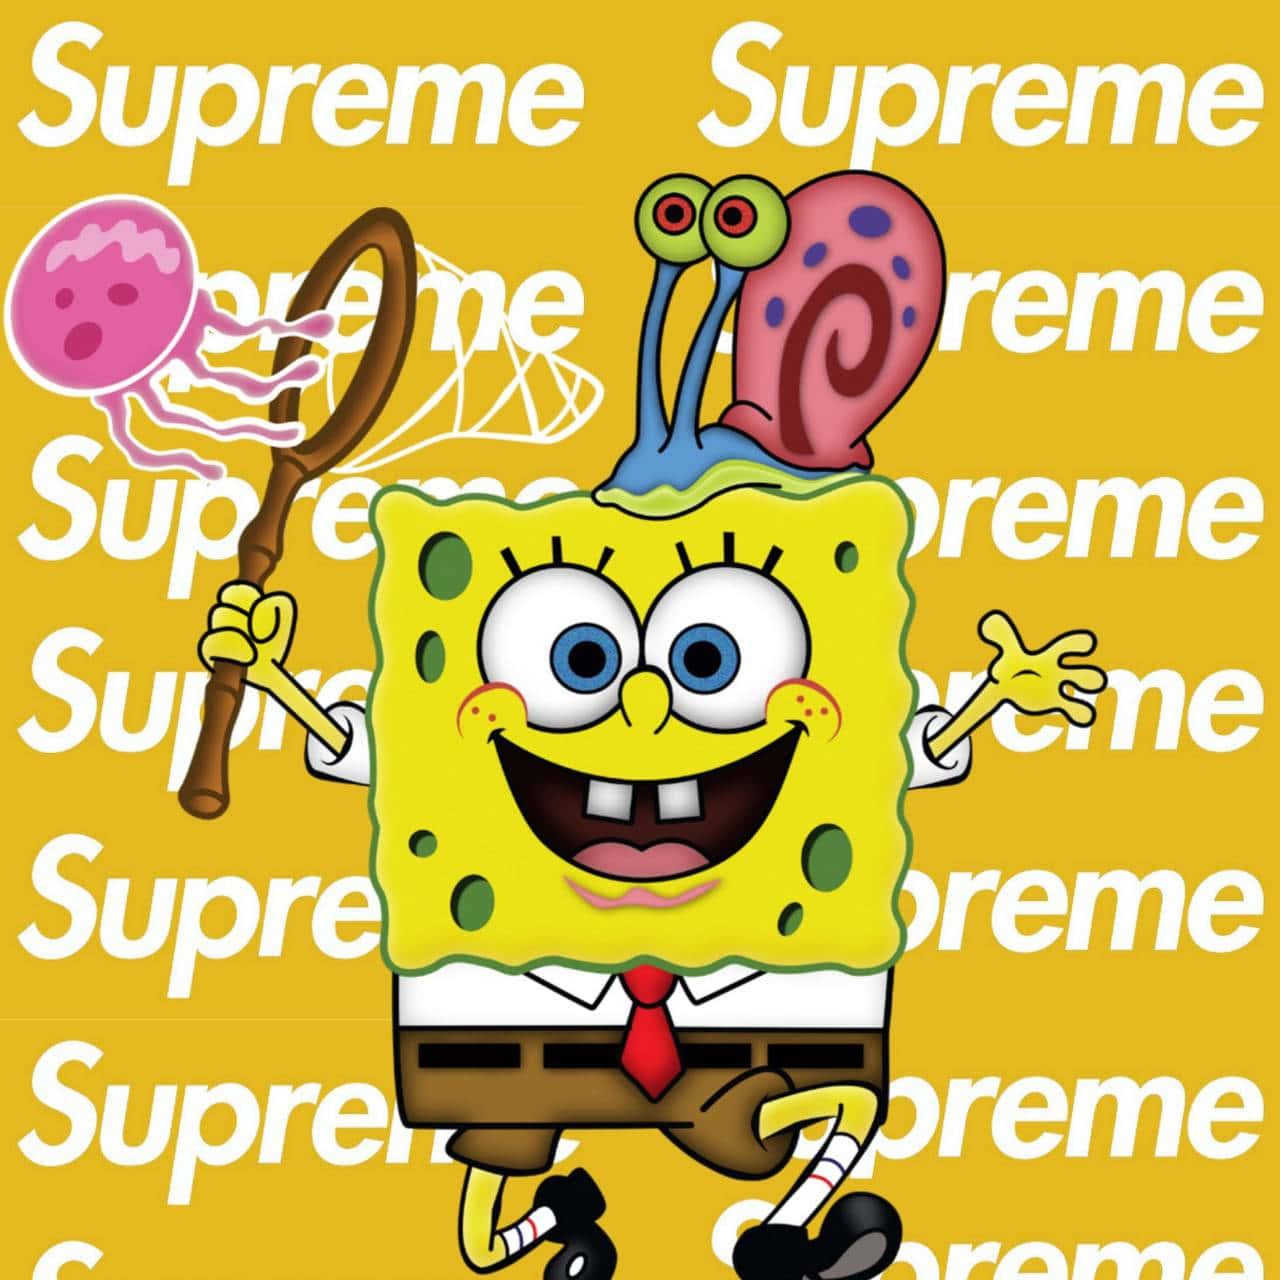 Spongebob Squarepants sporting Supreme clothing Wallpaper